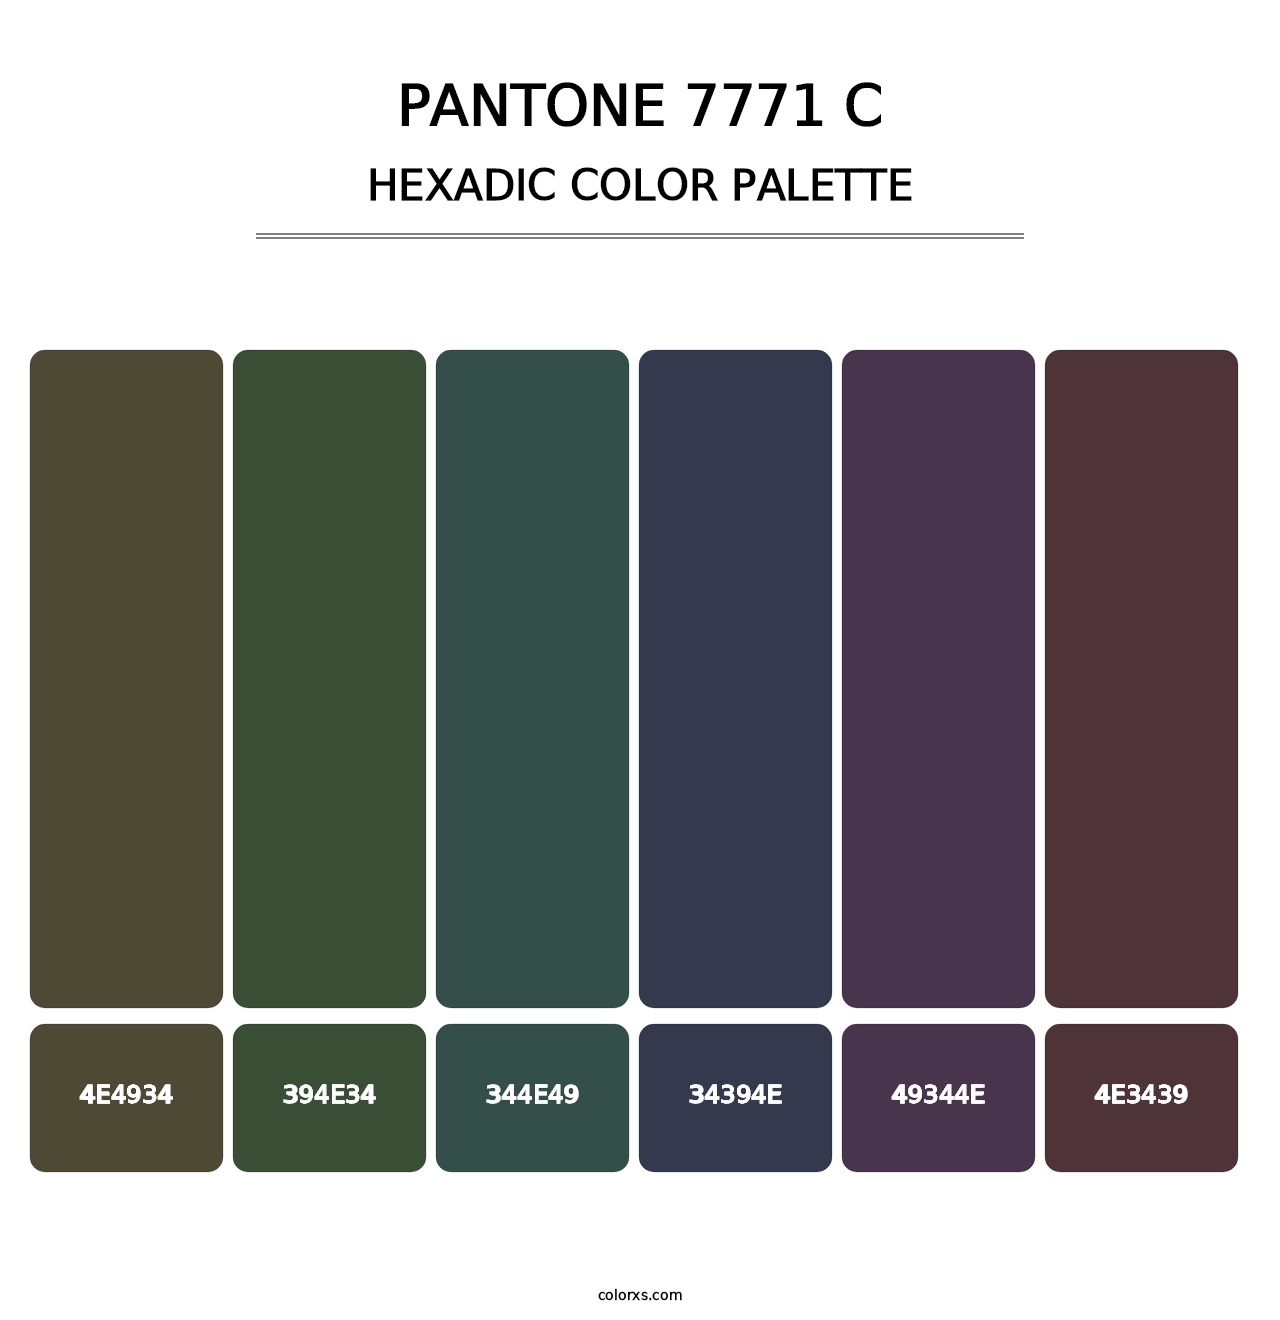 PANTONE 7771 C - Hexadic Color Palette